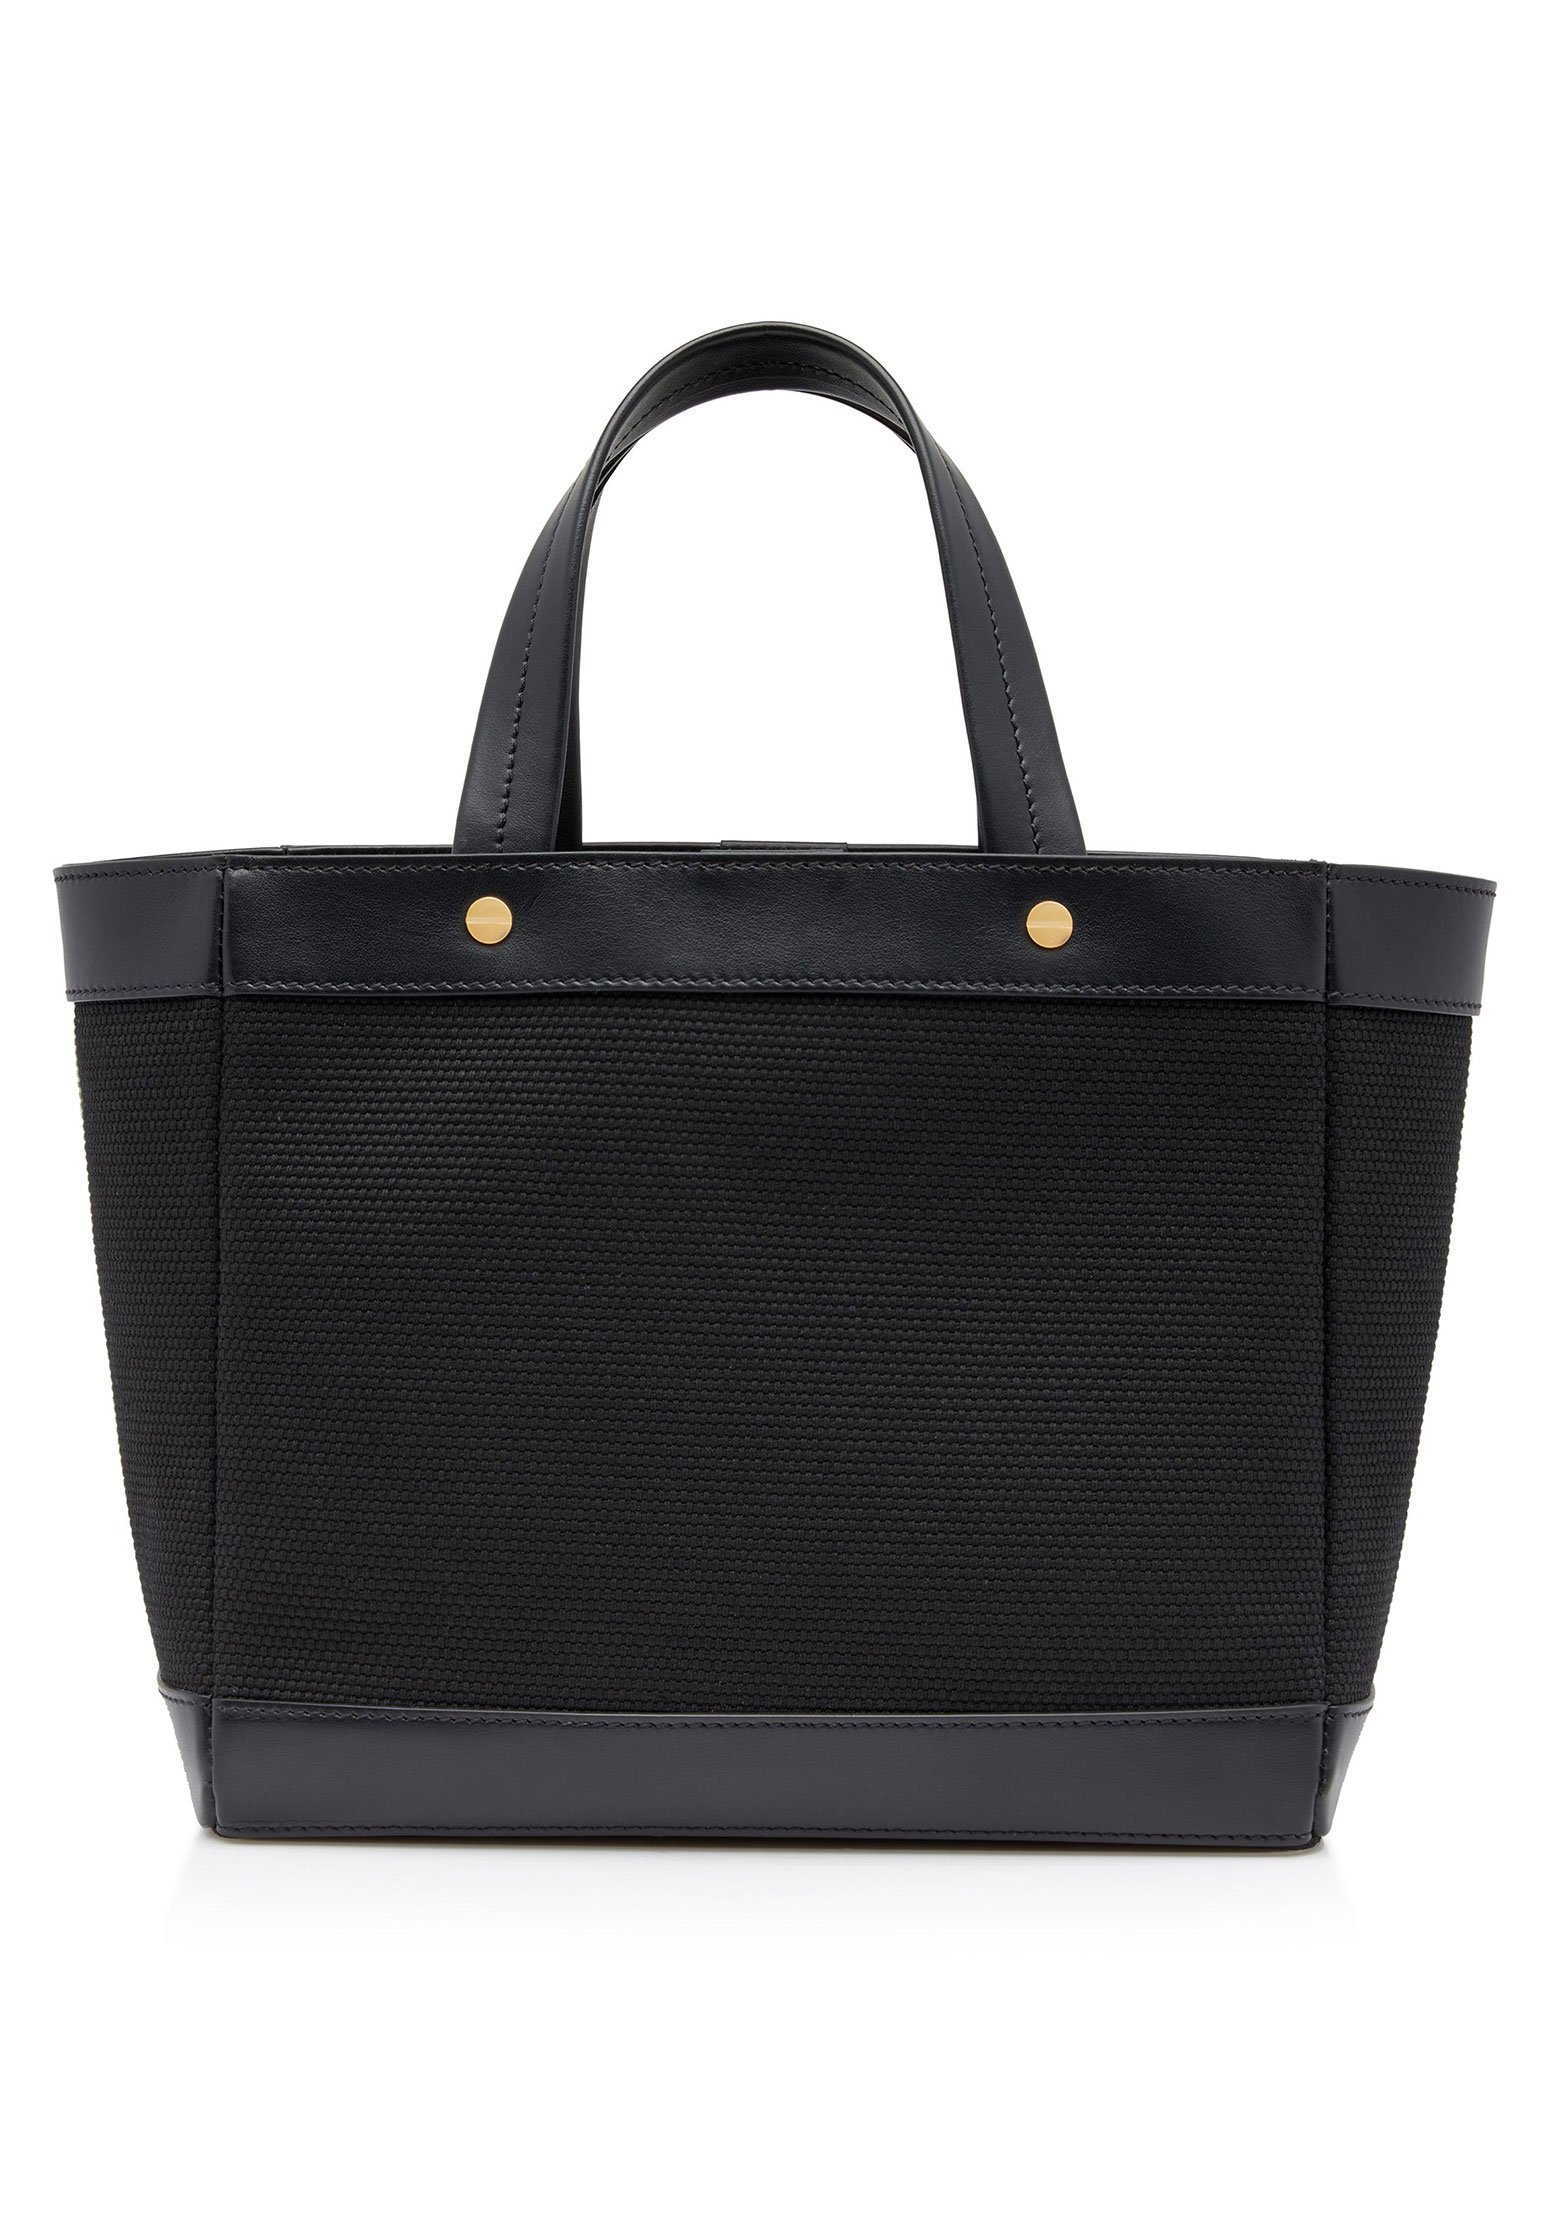 Tote bag TOM FORD Color: black (Code: 1092) in online store Allure